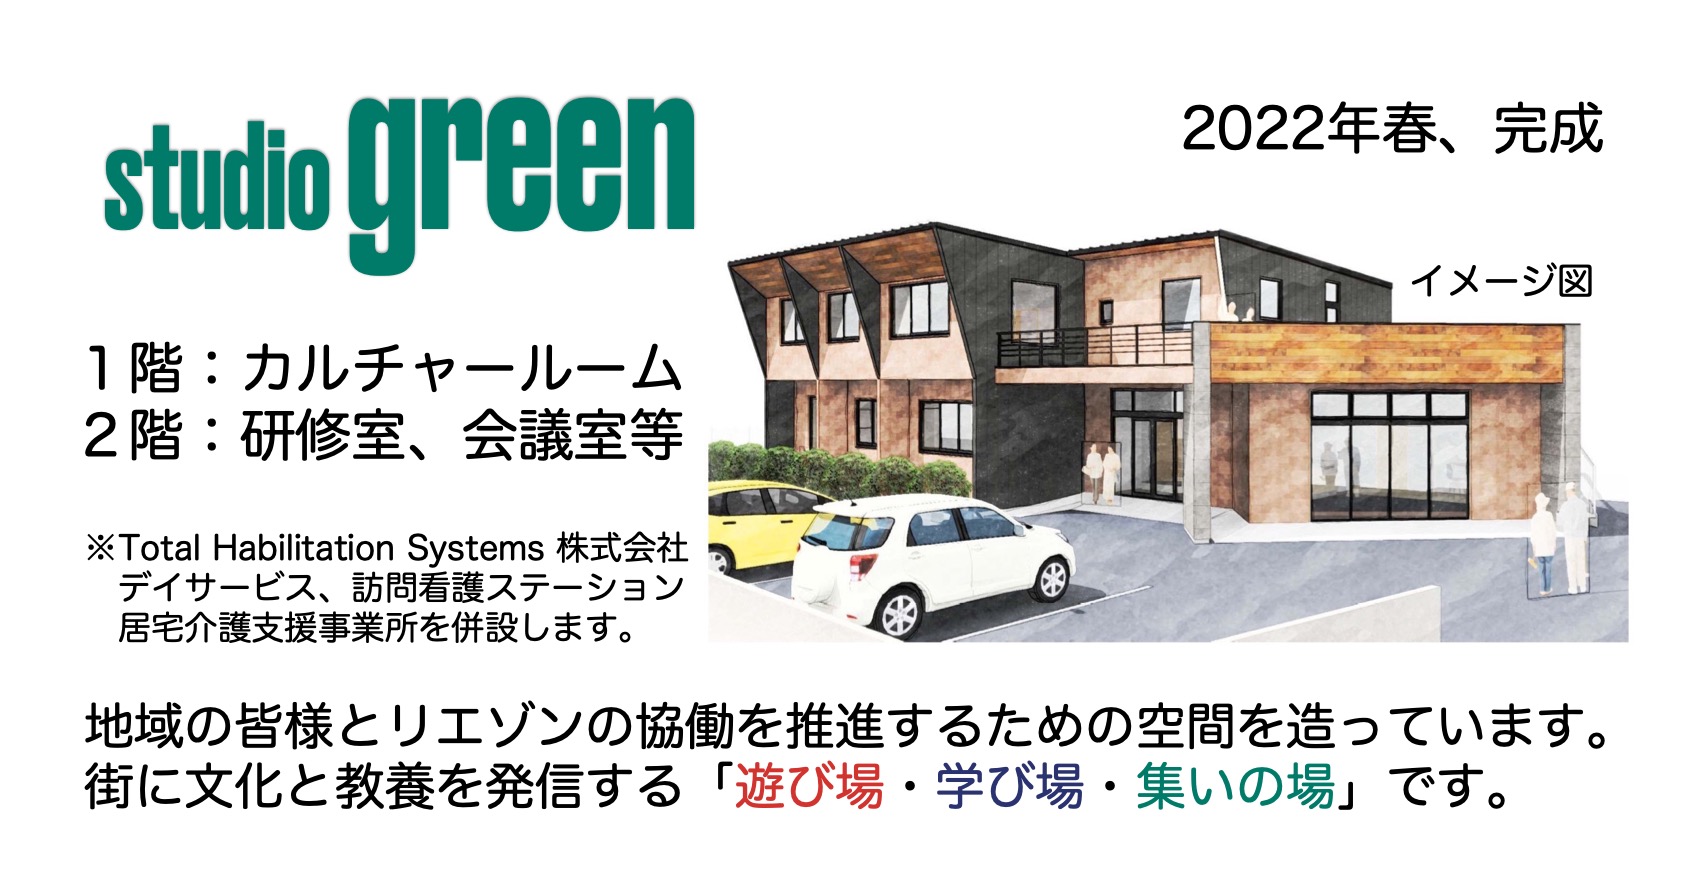 20210108_FB studio green